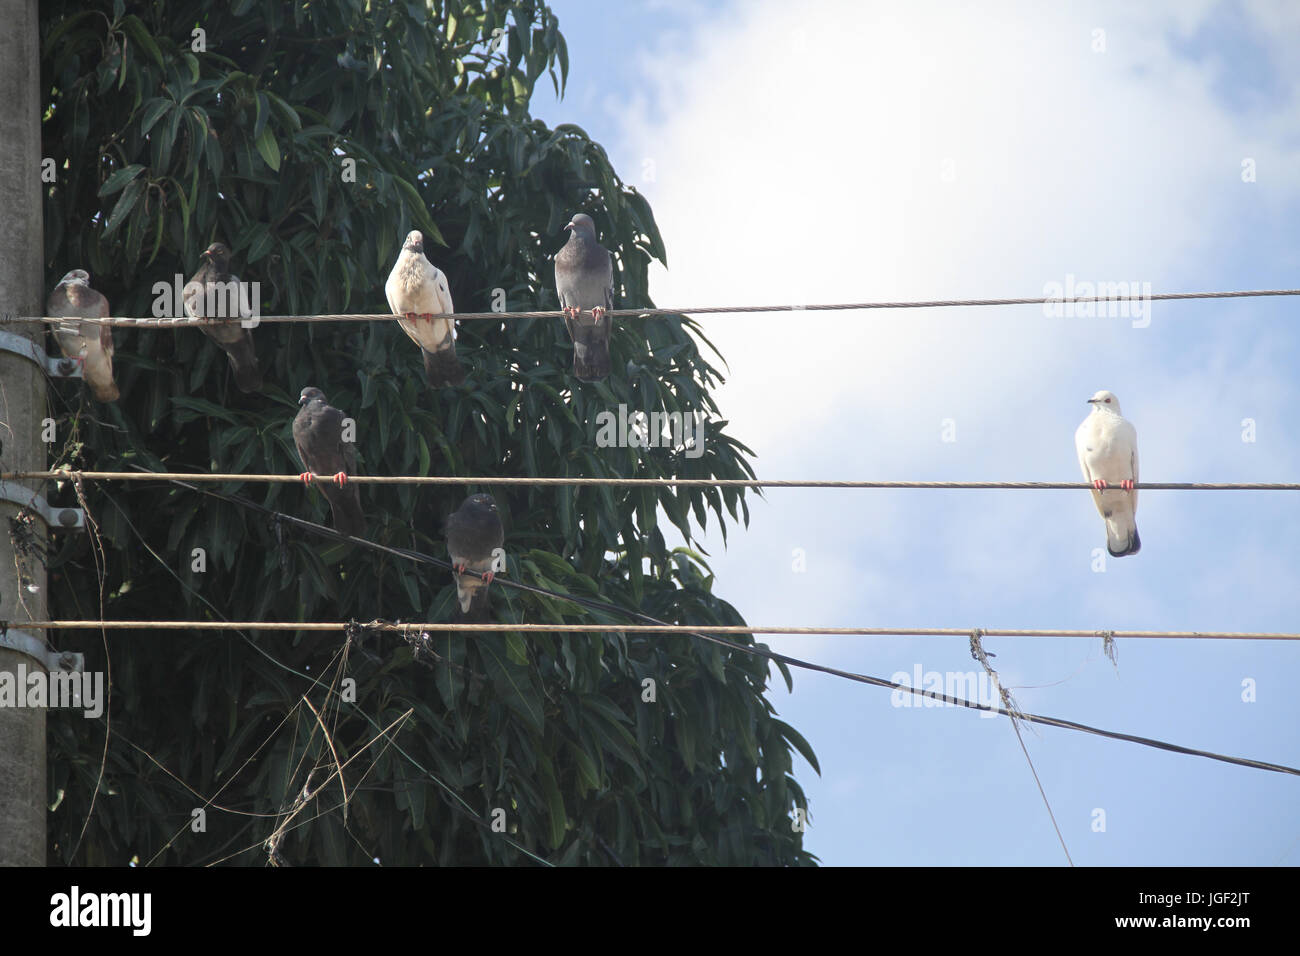 Doves, post, wire, 2014, Capital, São Paulo, Brazil. Stock Photo